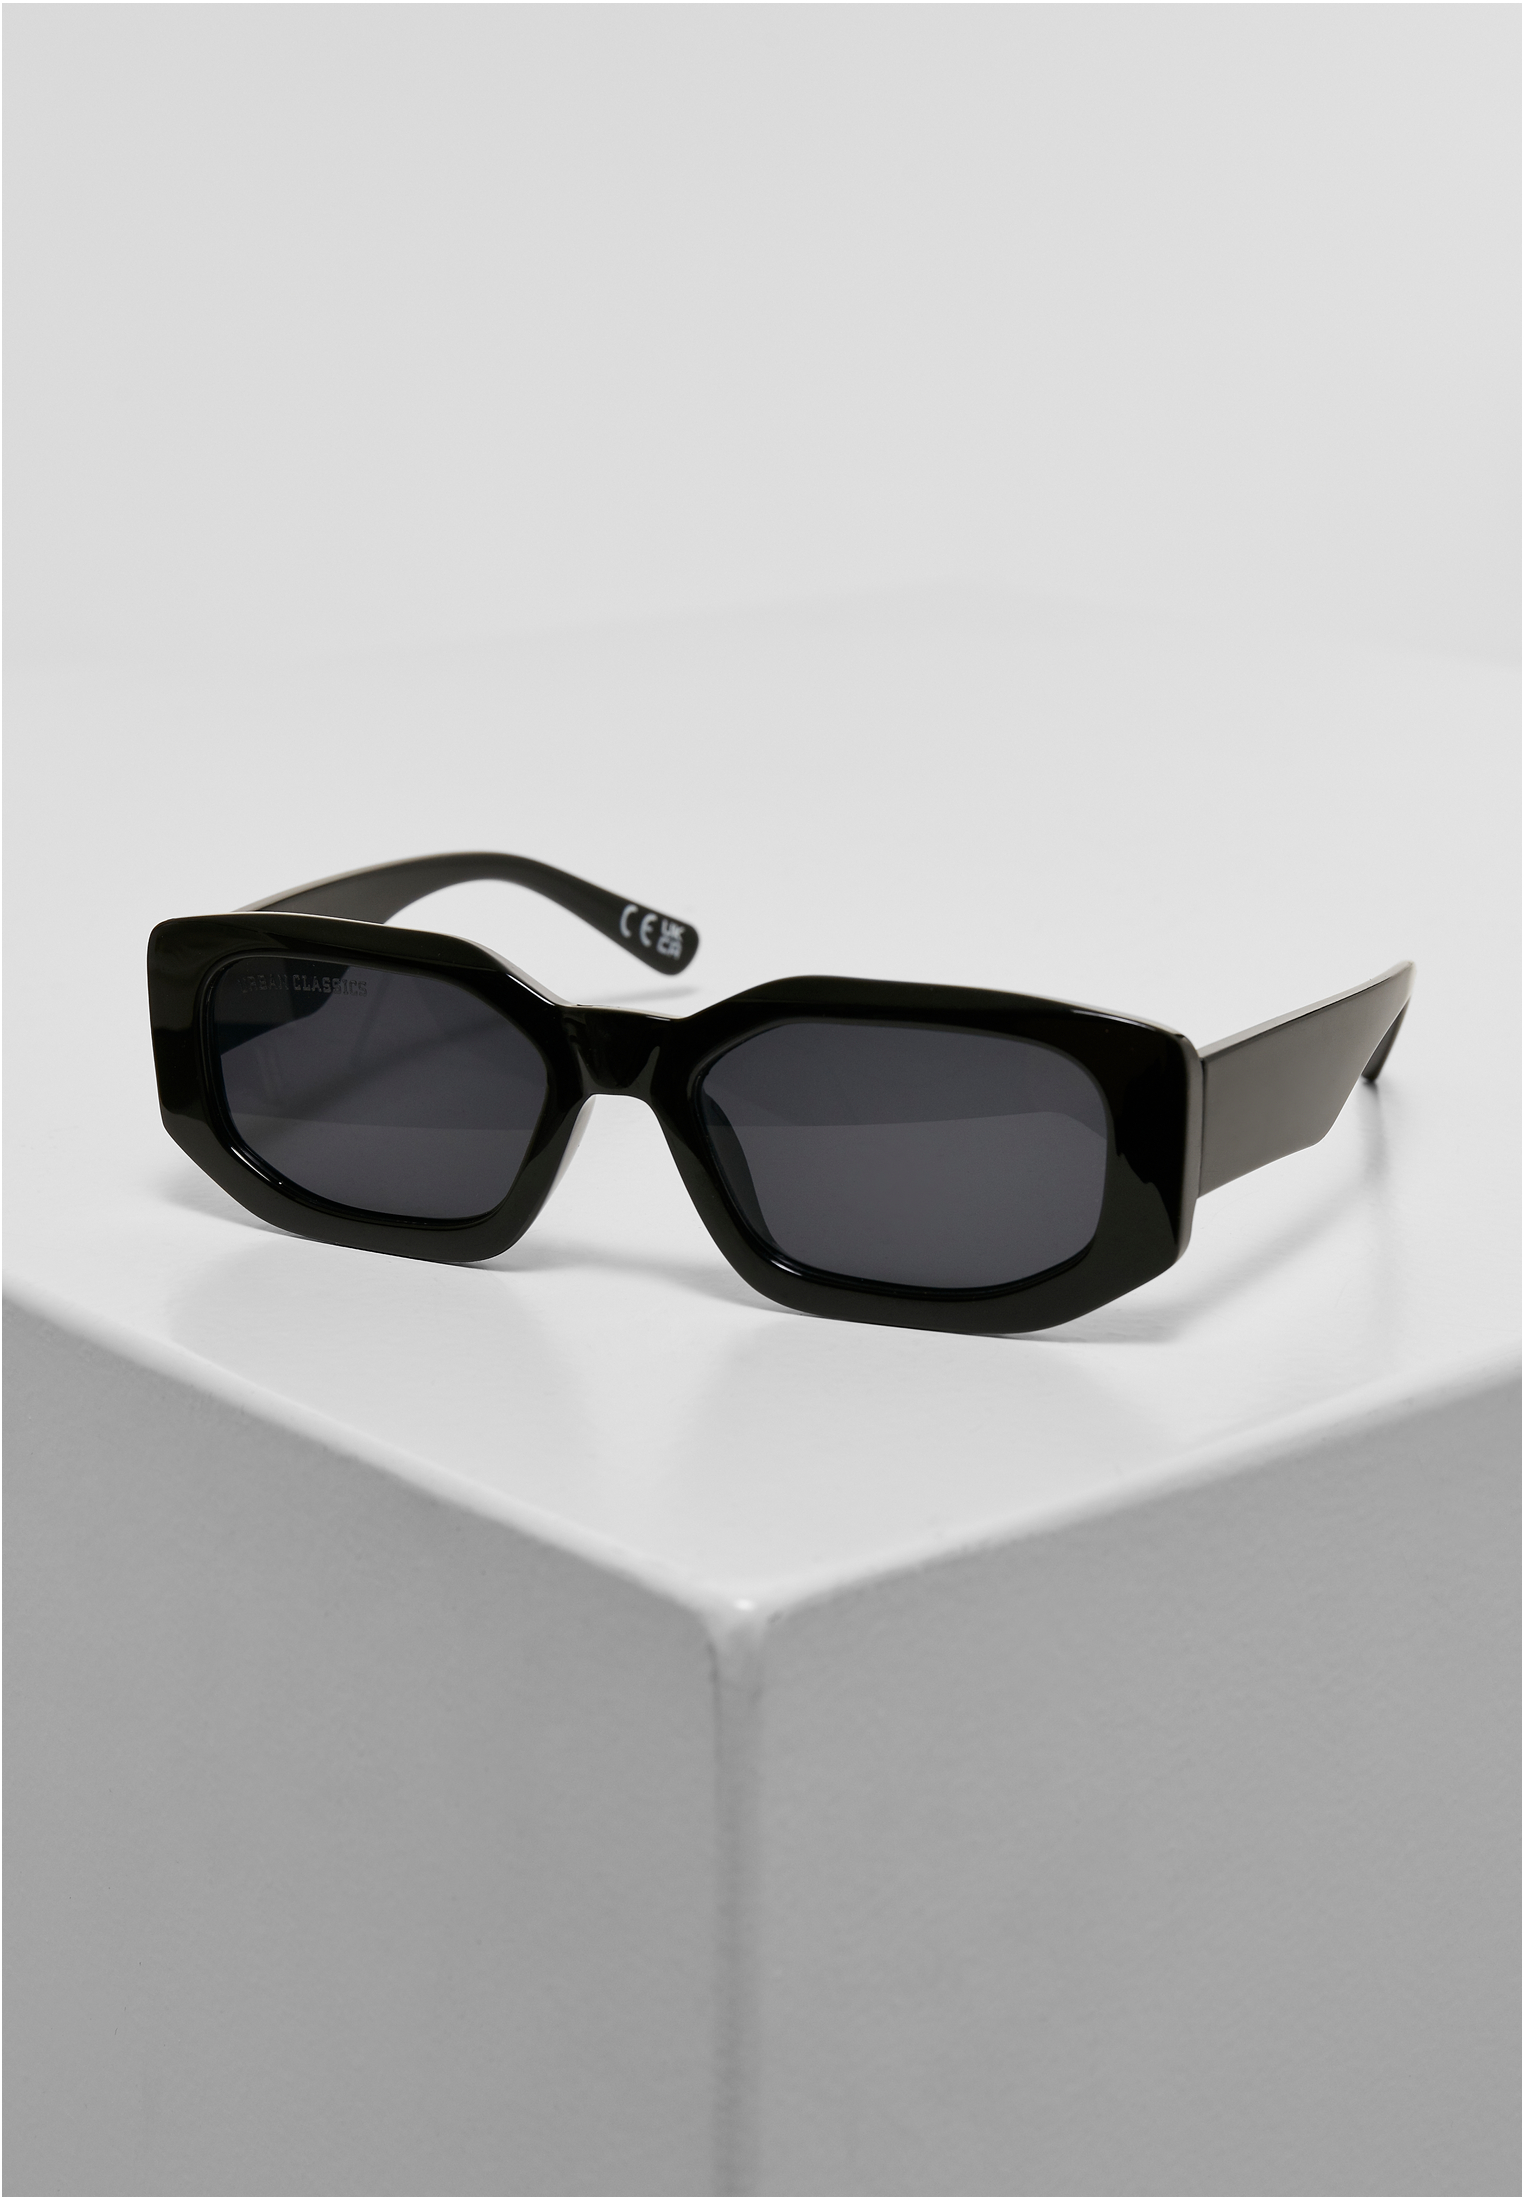 Sunglasses Santa Rosa-TB5202 | Sonnenbrillen